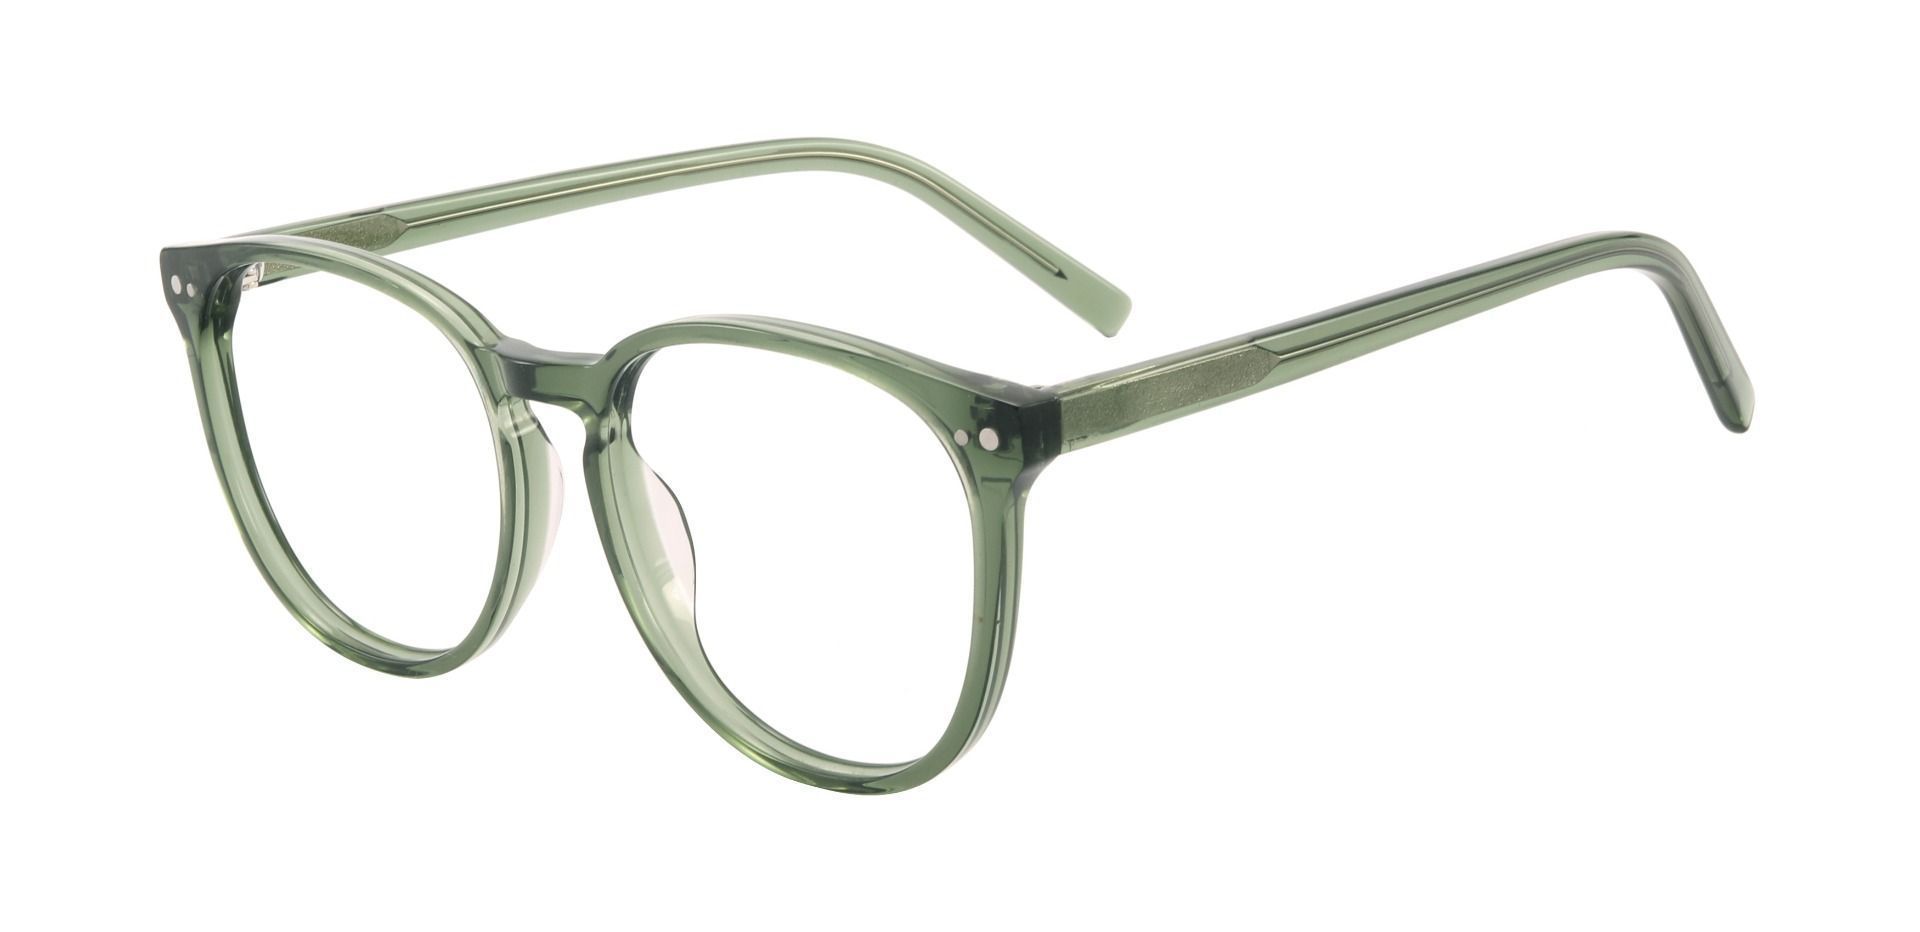 Herron Oval Prescription Glasses - Green